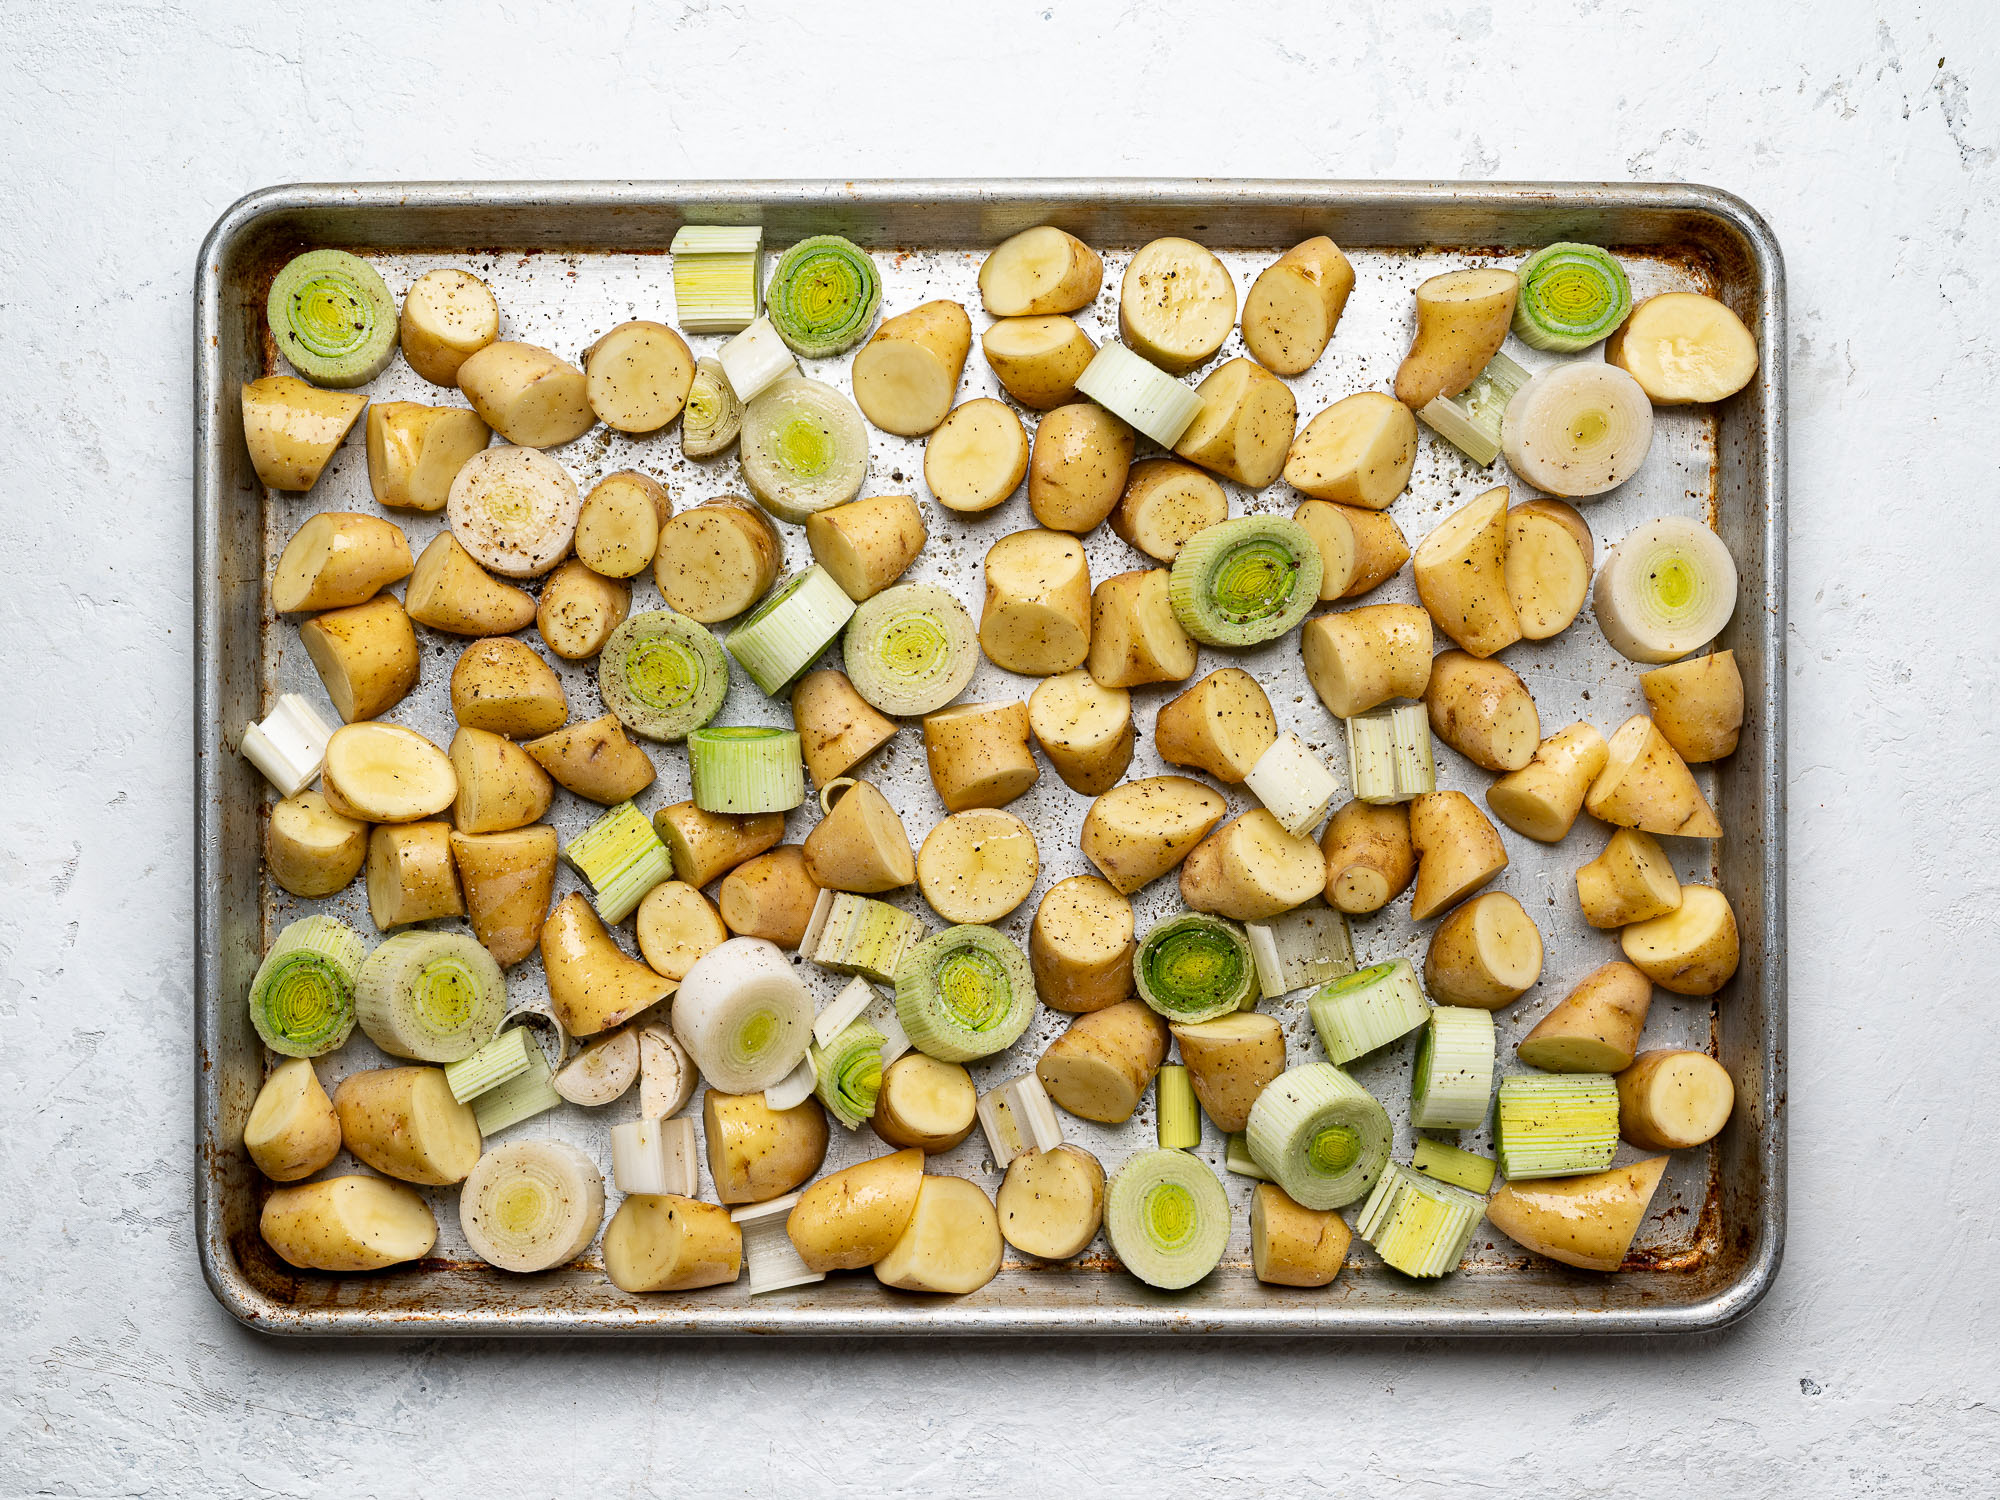 potatoes and leeks on sheet pan